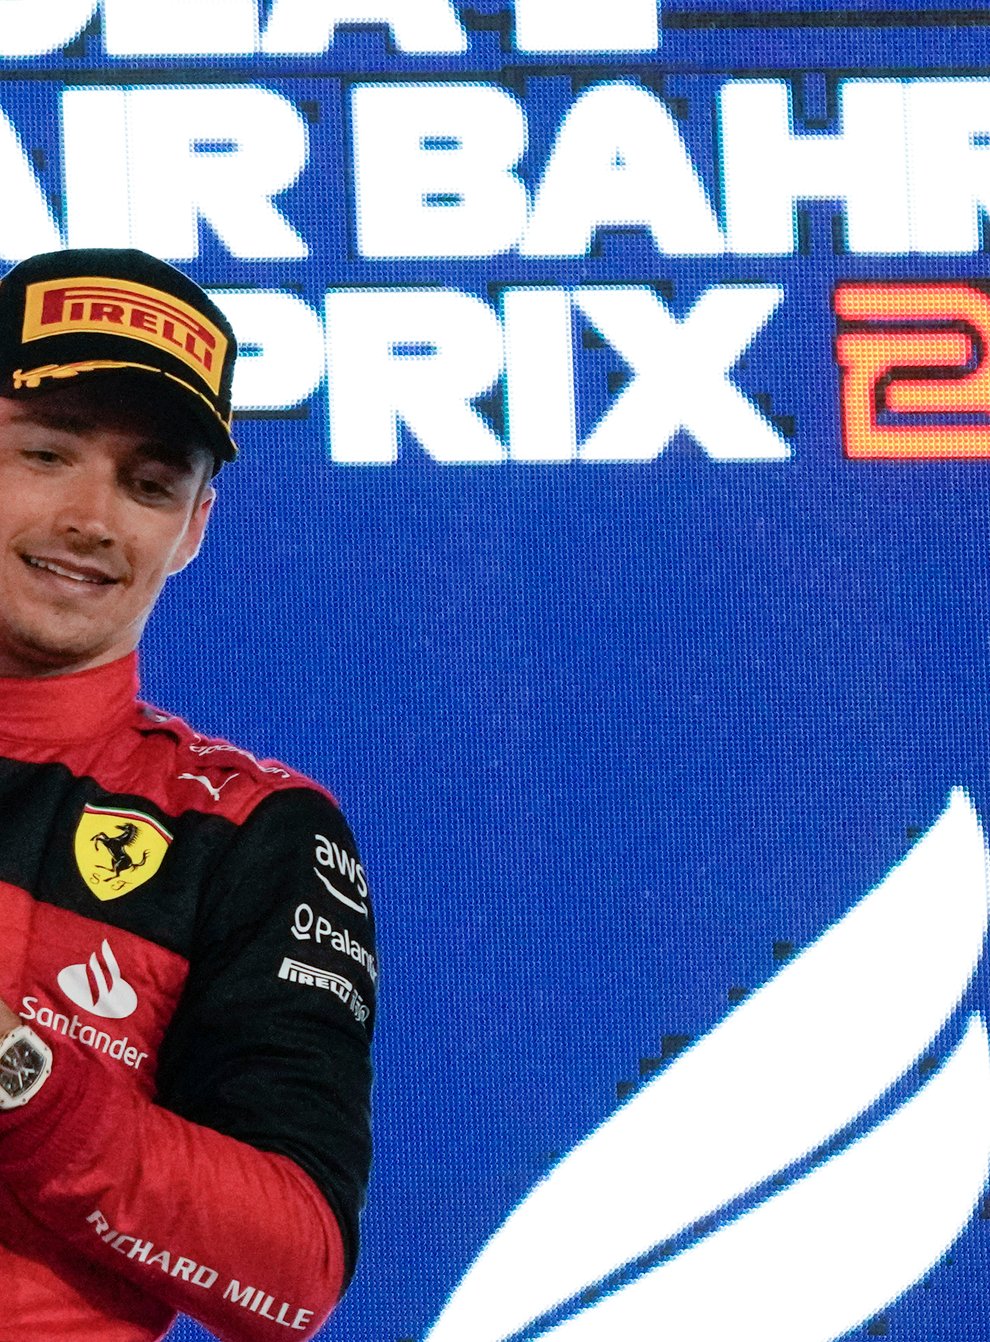 Charles Leclerc celebrates victory at the Bahrain Grand Prix (Hassan Ammar/AP)